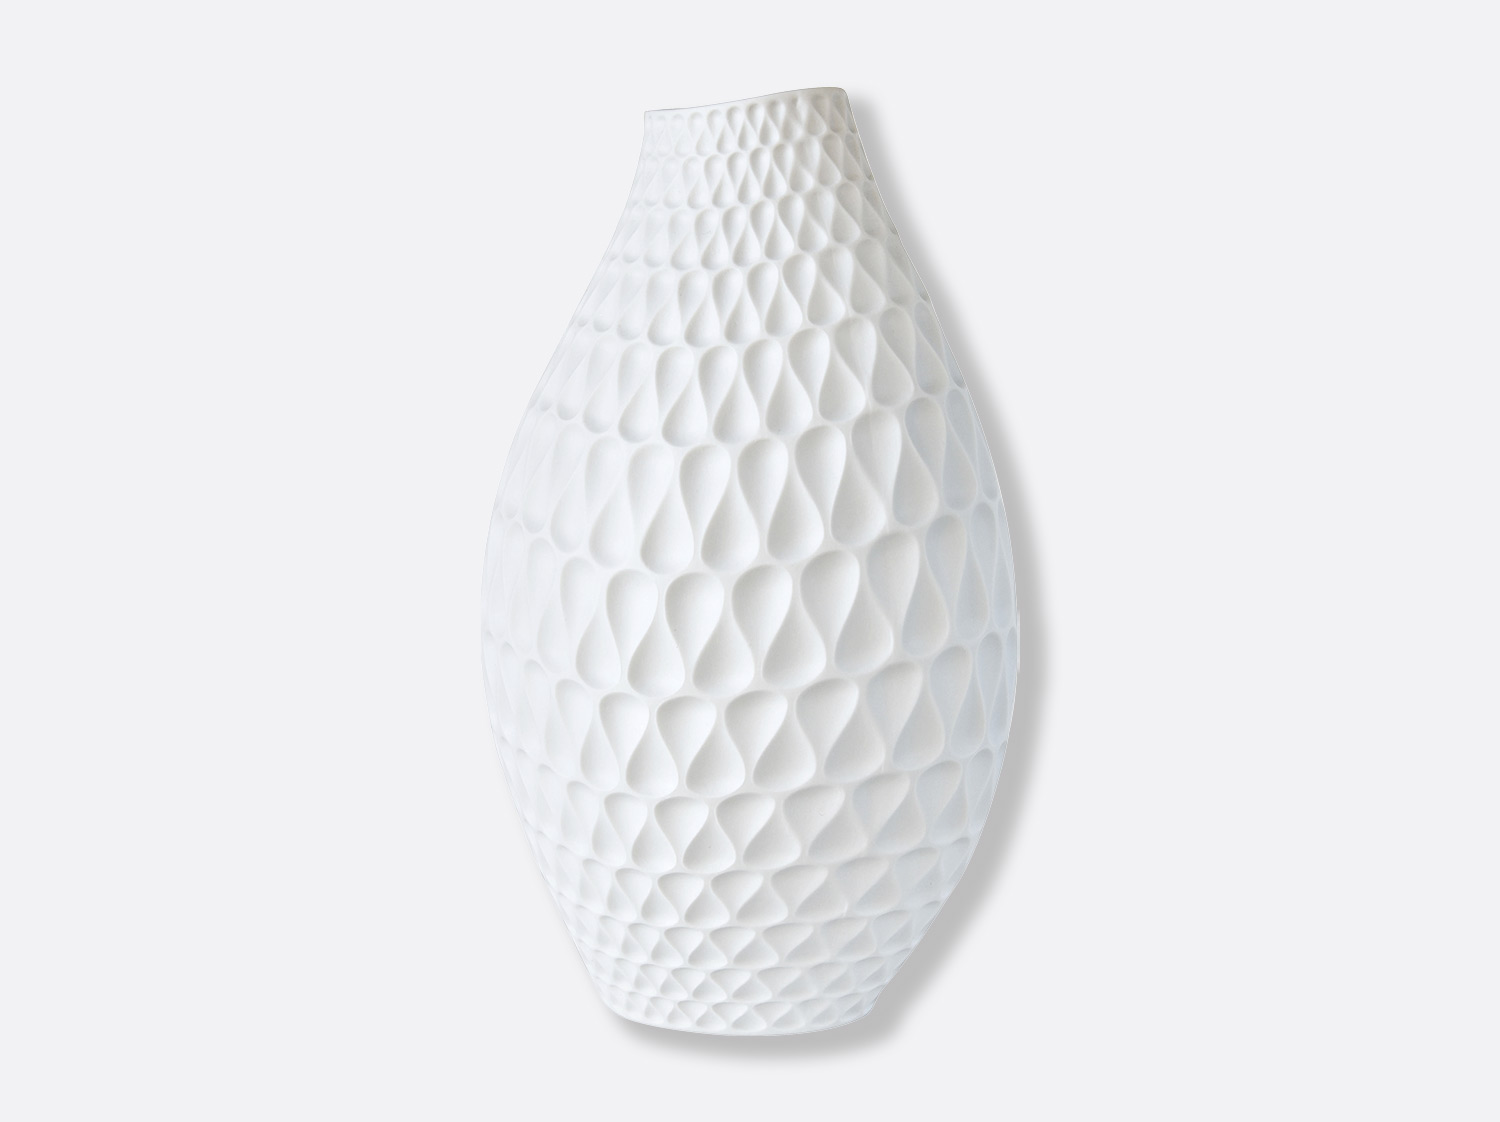 China Organic shape vase in bisque porcelain H. 30 cm of the collection Legende | Bernardaud